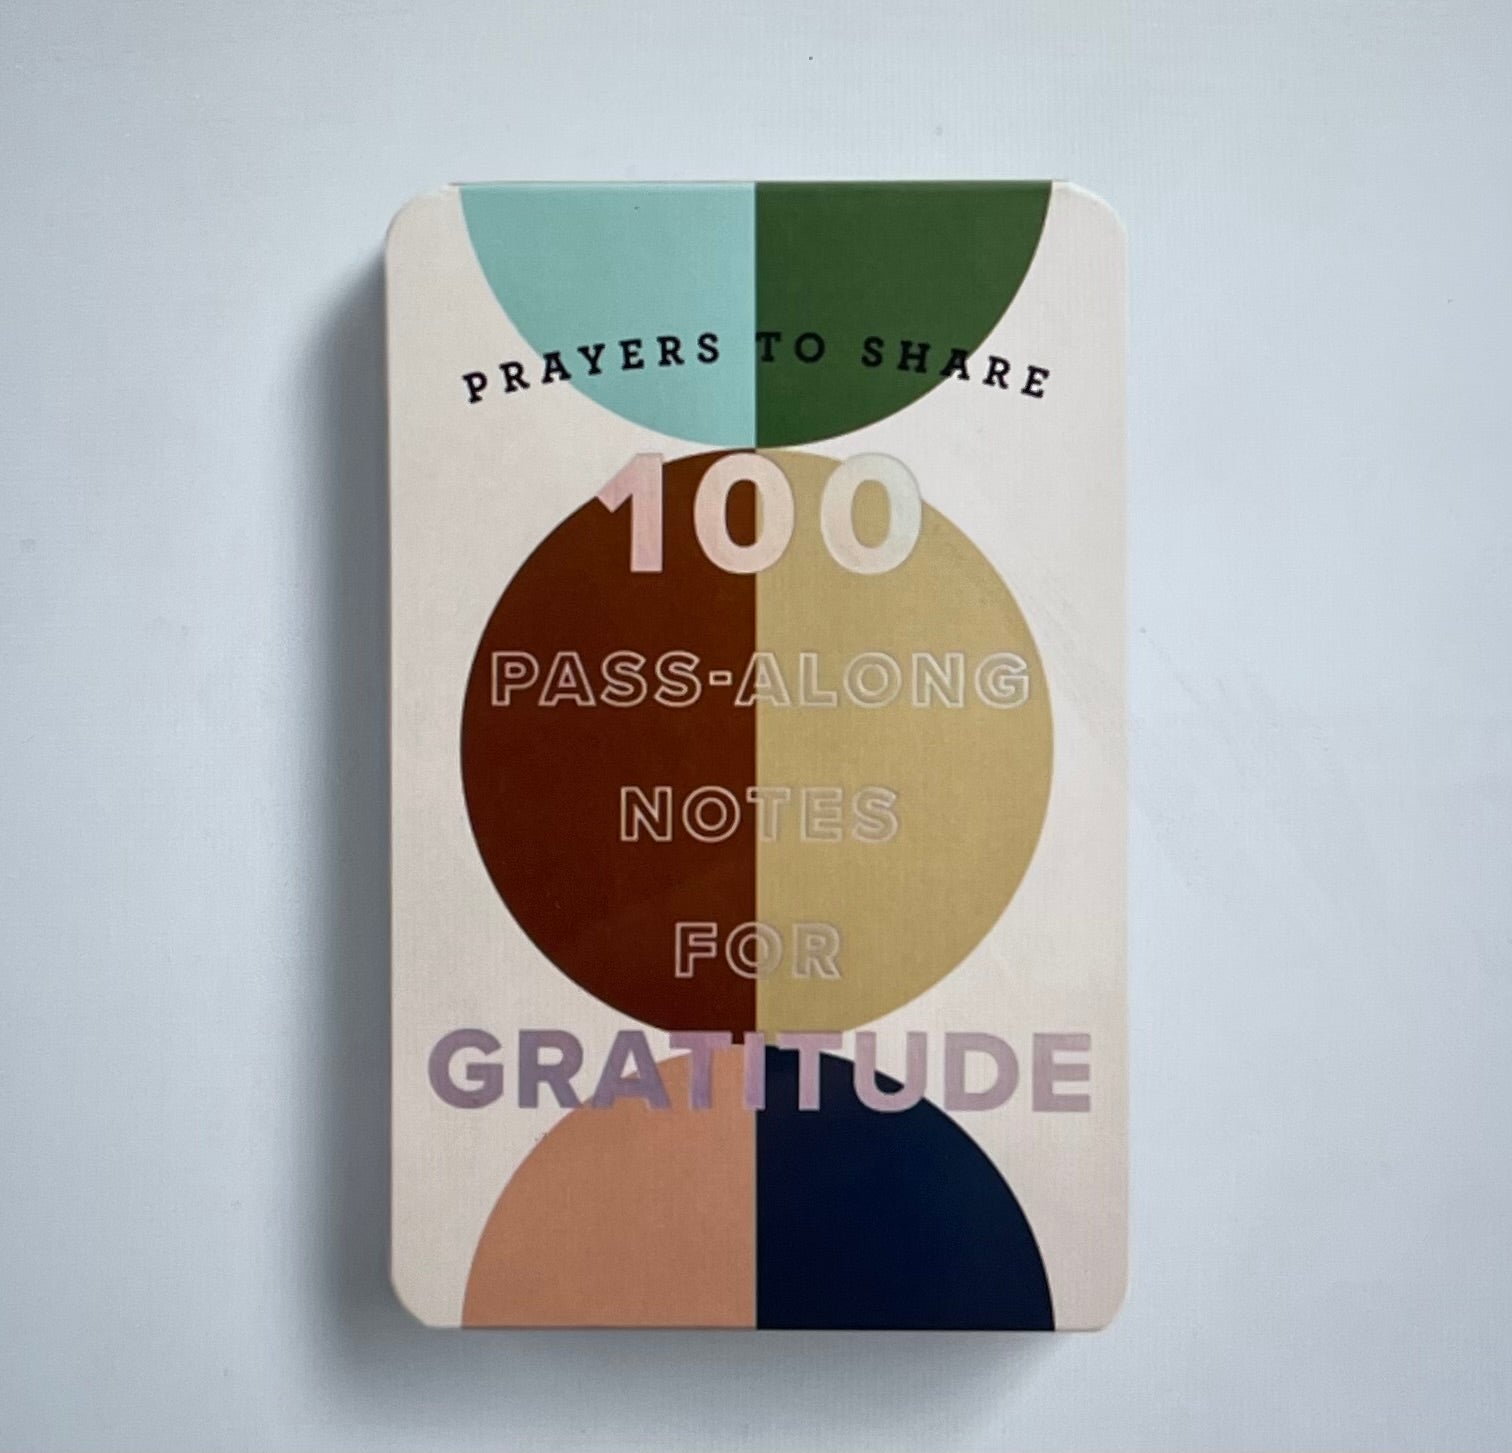 Prayers to Share: 100 Pass-Along Notes for Gratitude